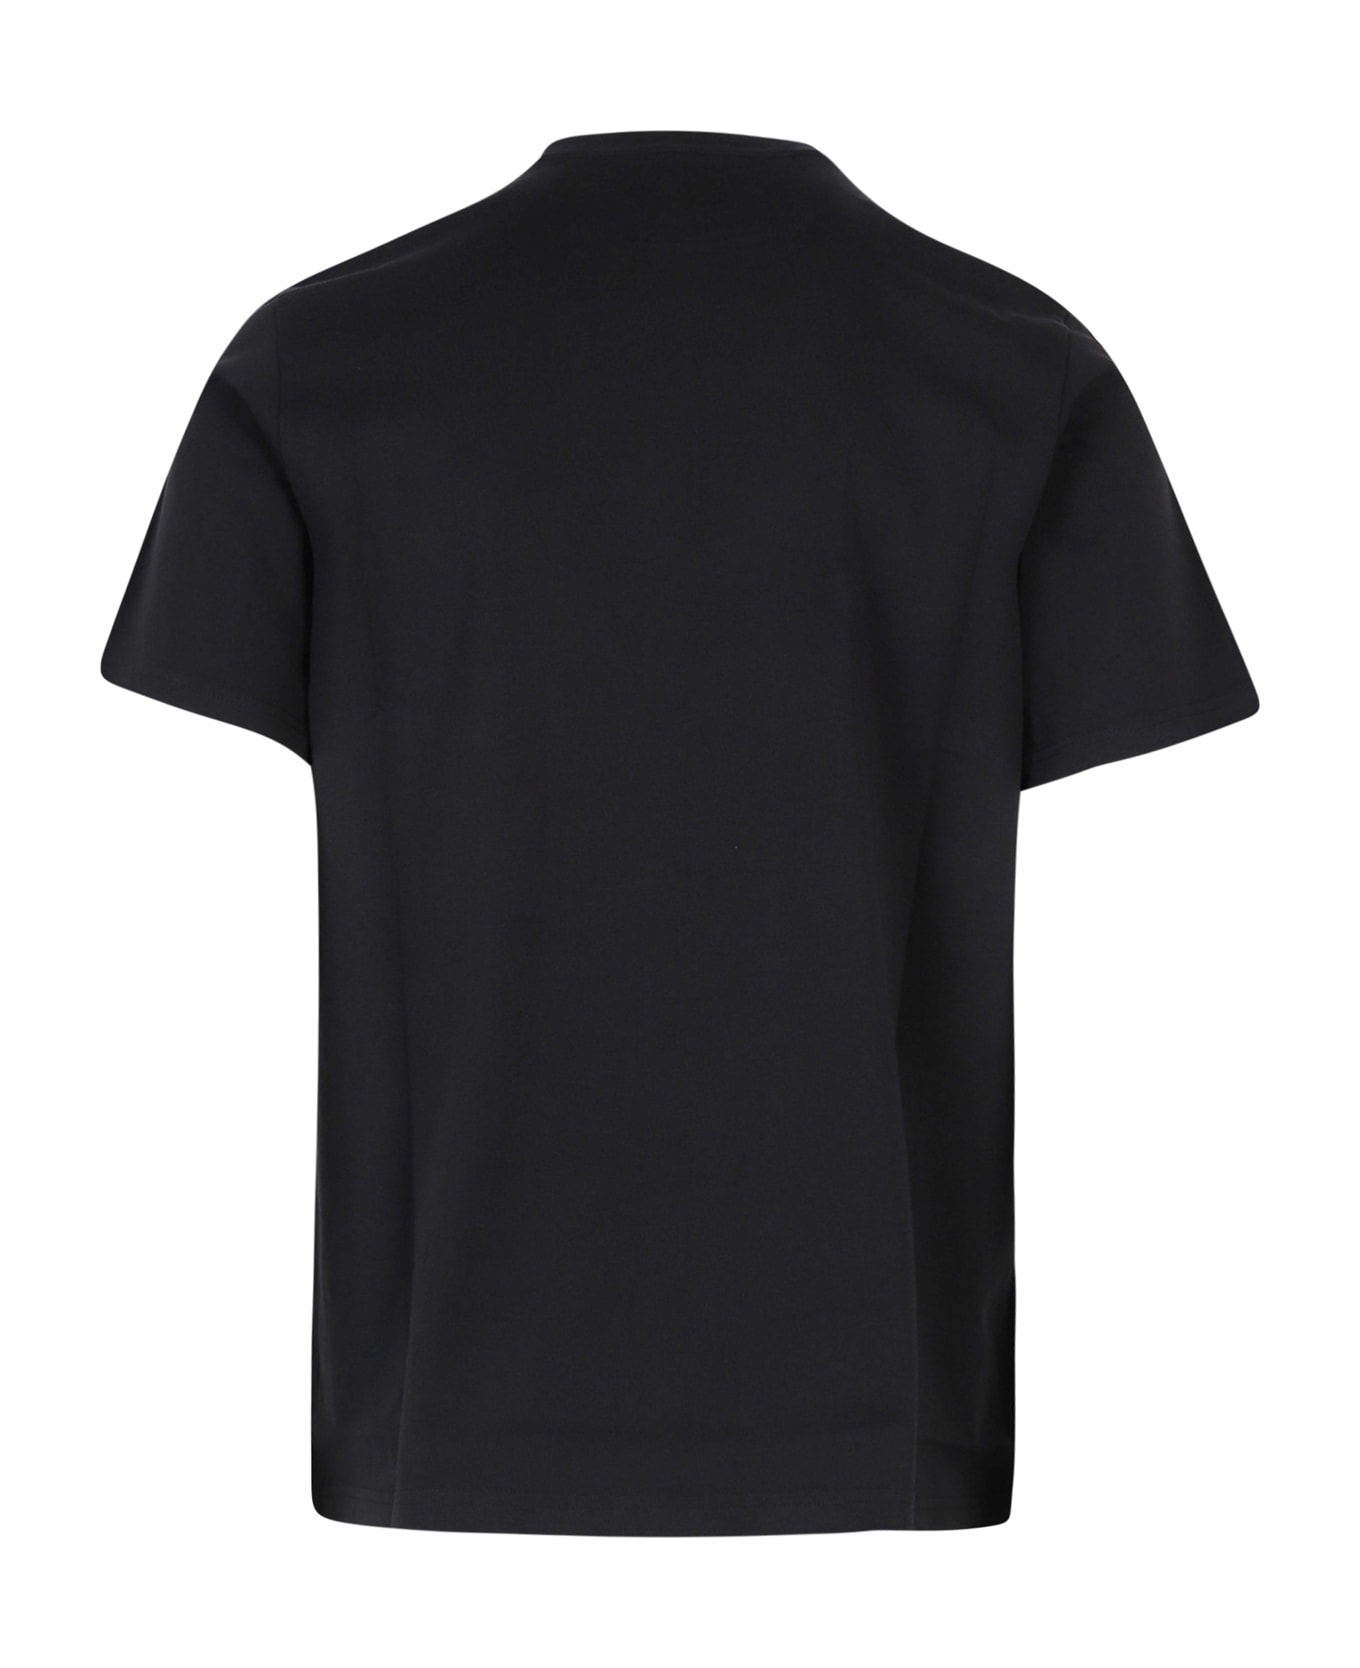 Martine Rose T-shirt - Black シャツ